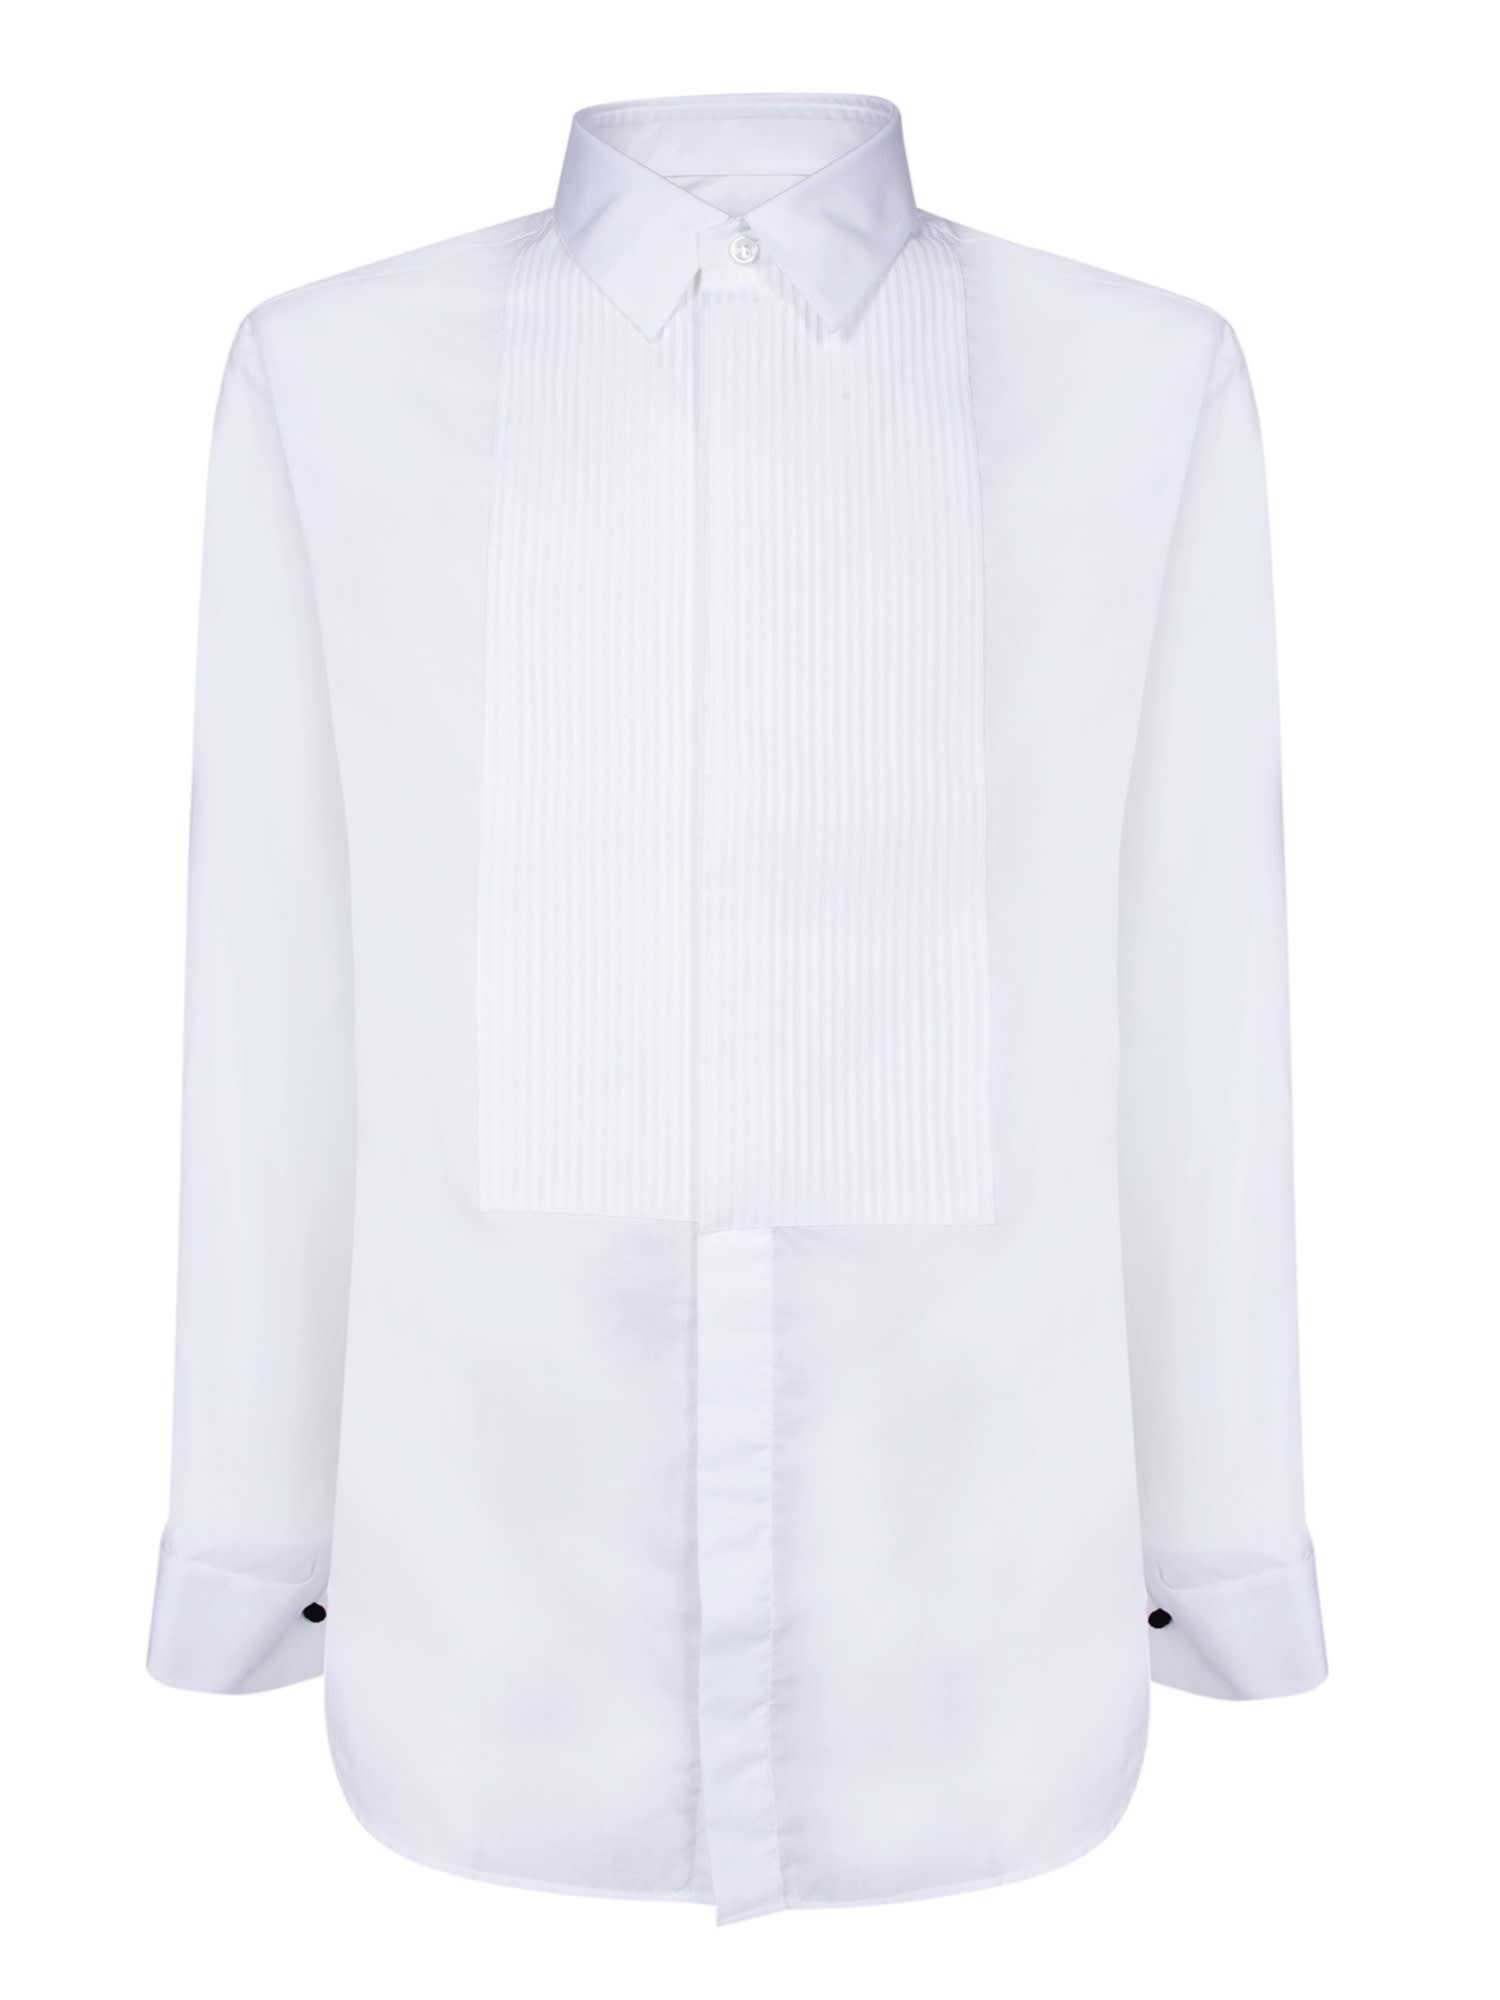 White Pleat Shirt